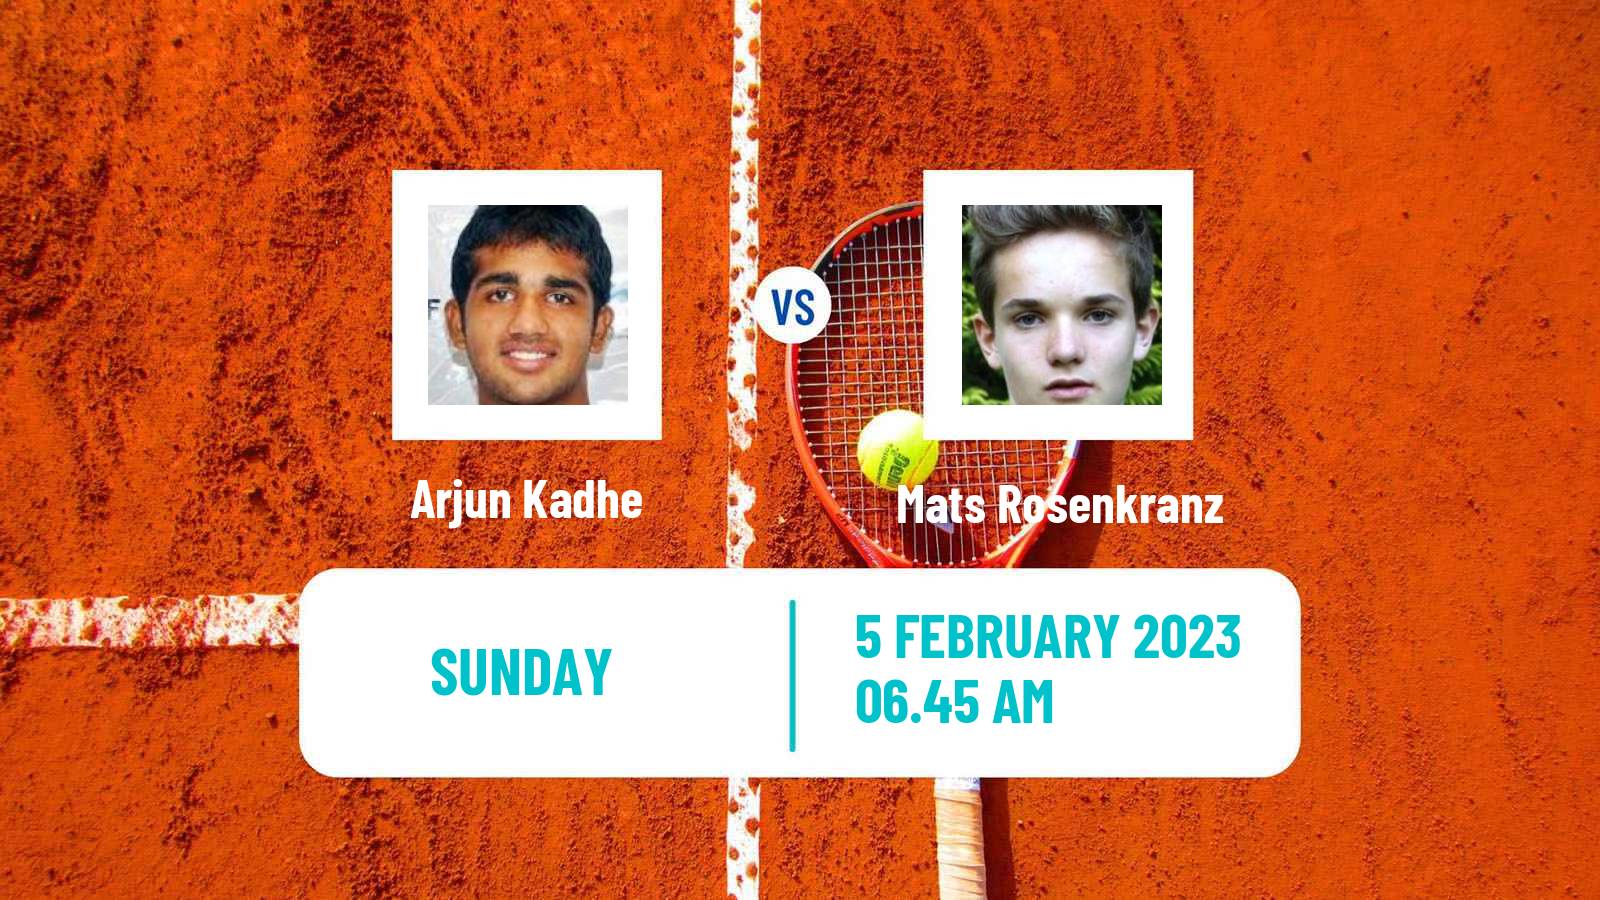 Tennis ATP Challenger Arjun Kadhe - Mats Rosenkranz